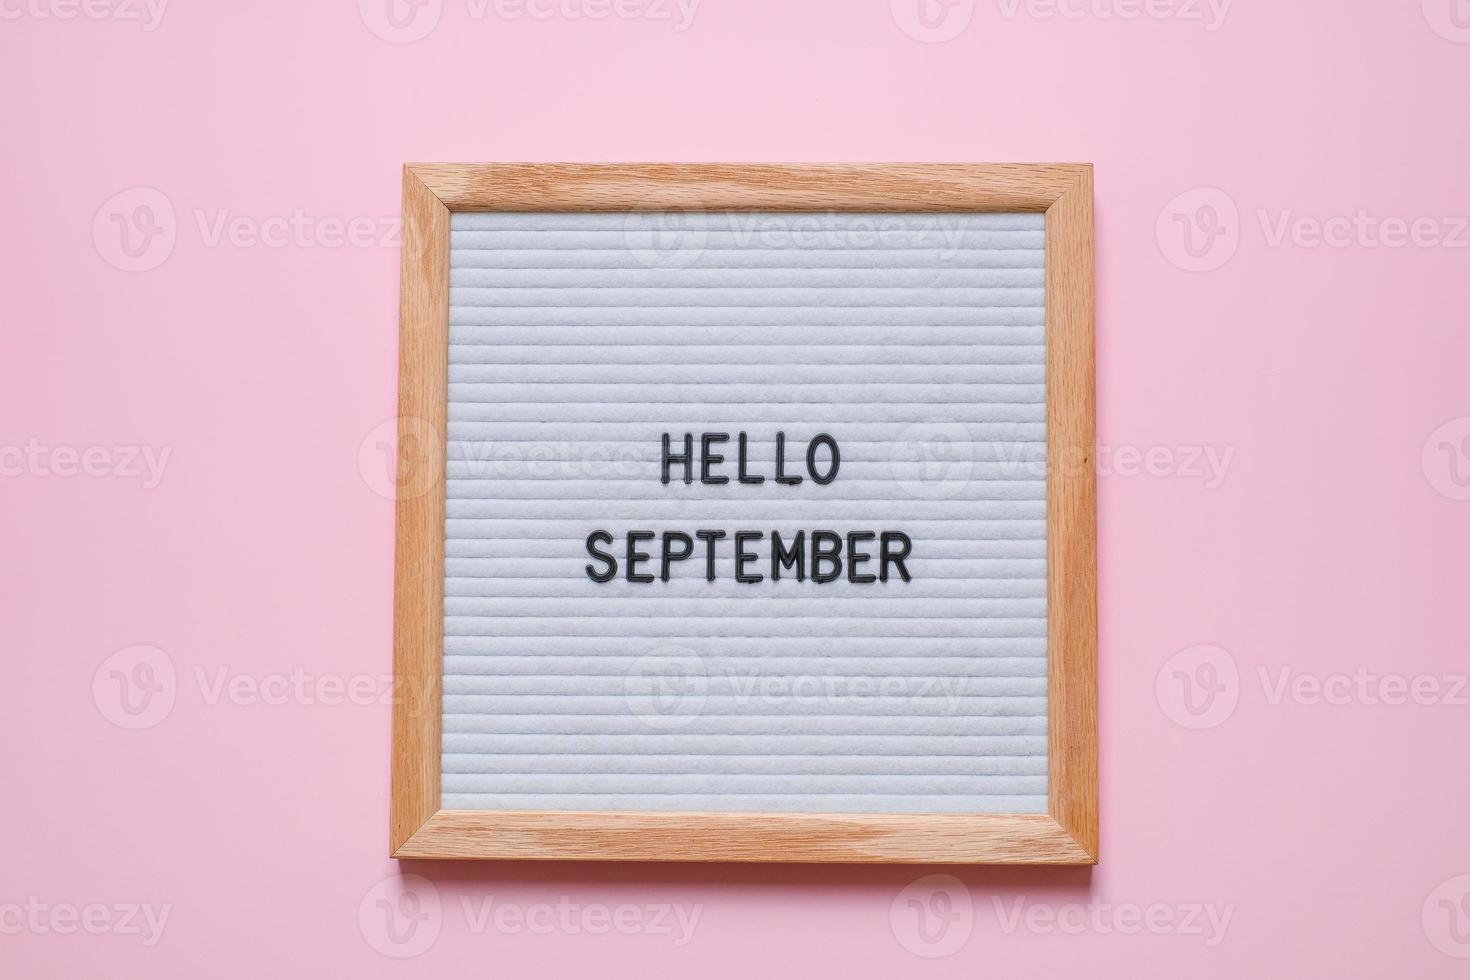 Hello September greeting concept photo